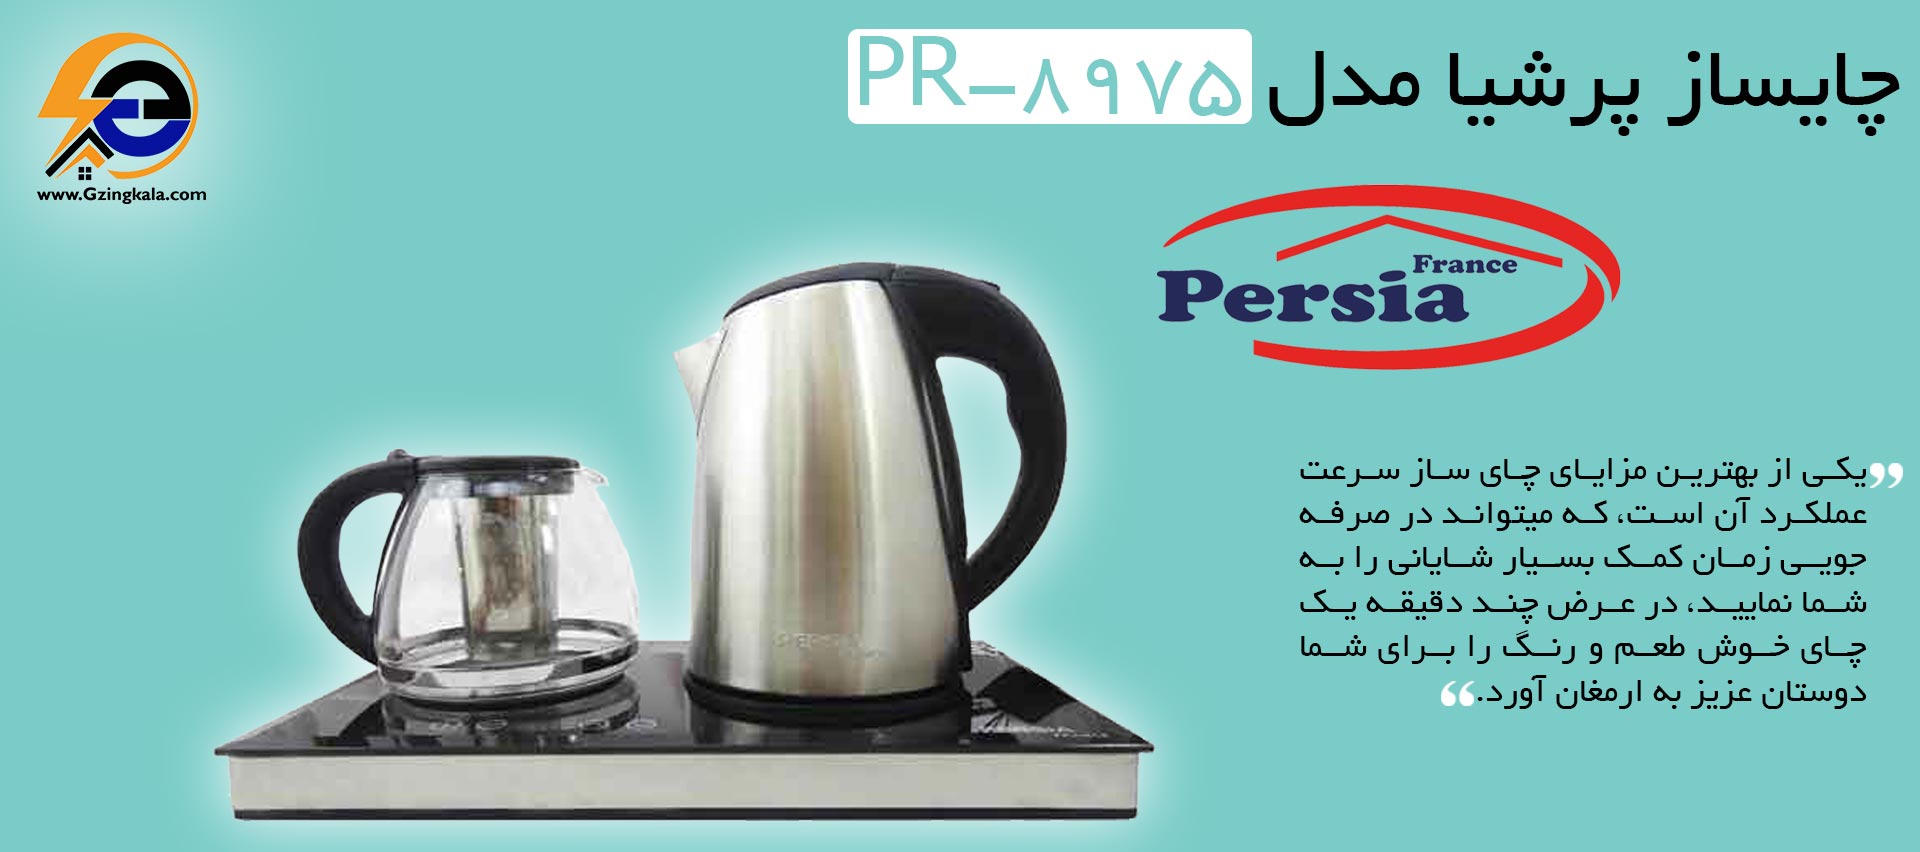 چایساز پرشیا مدل PR-8975